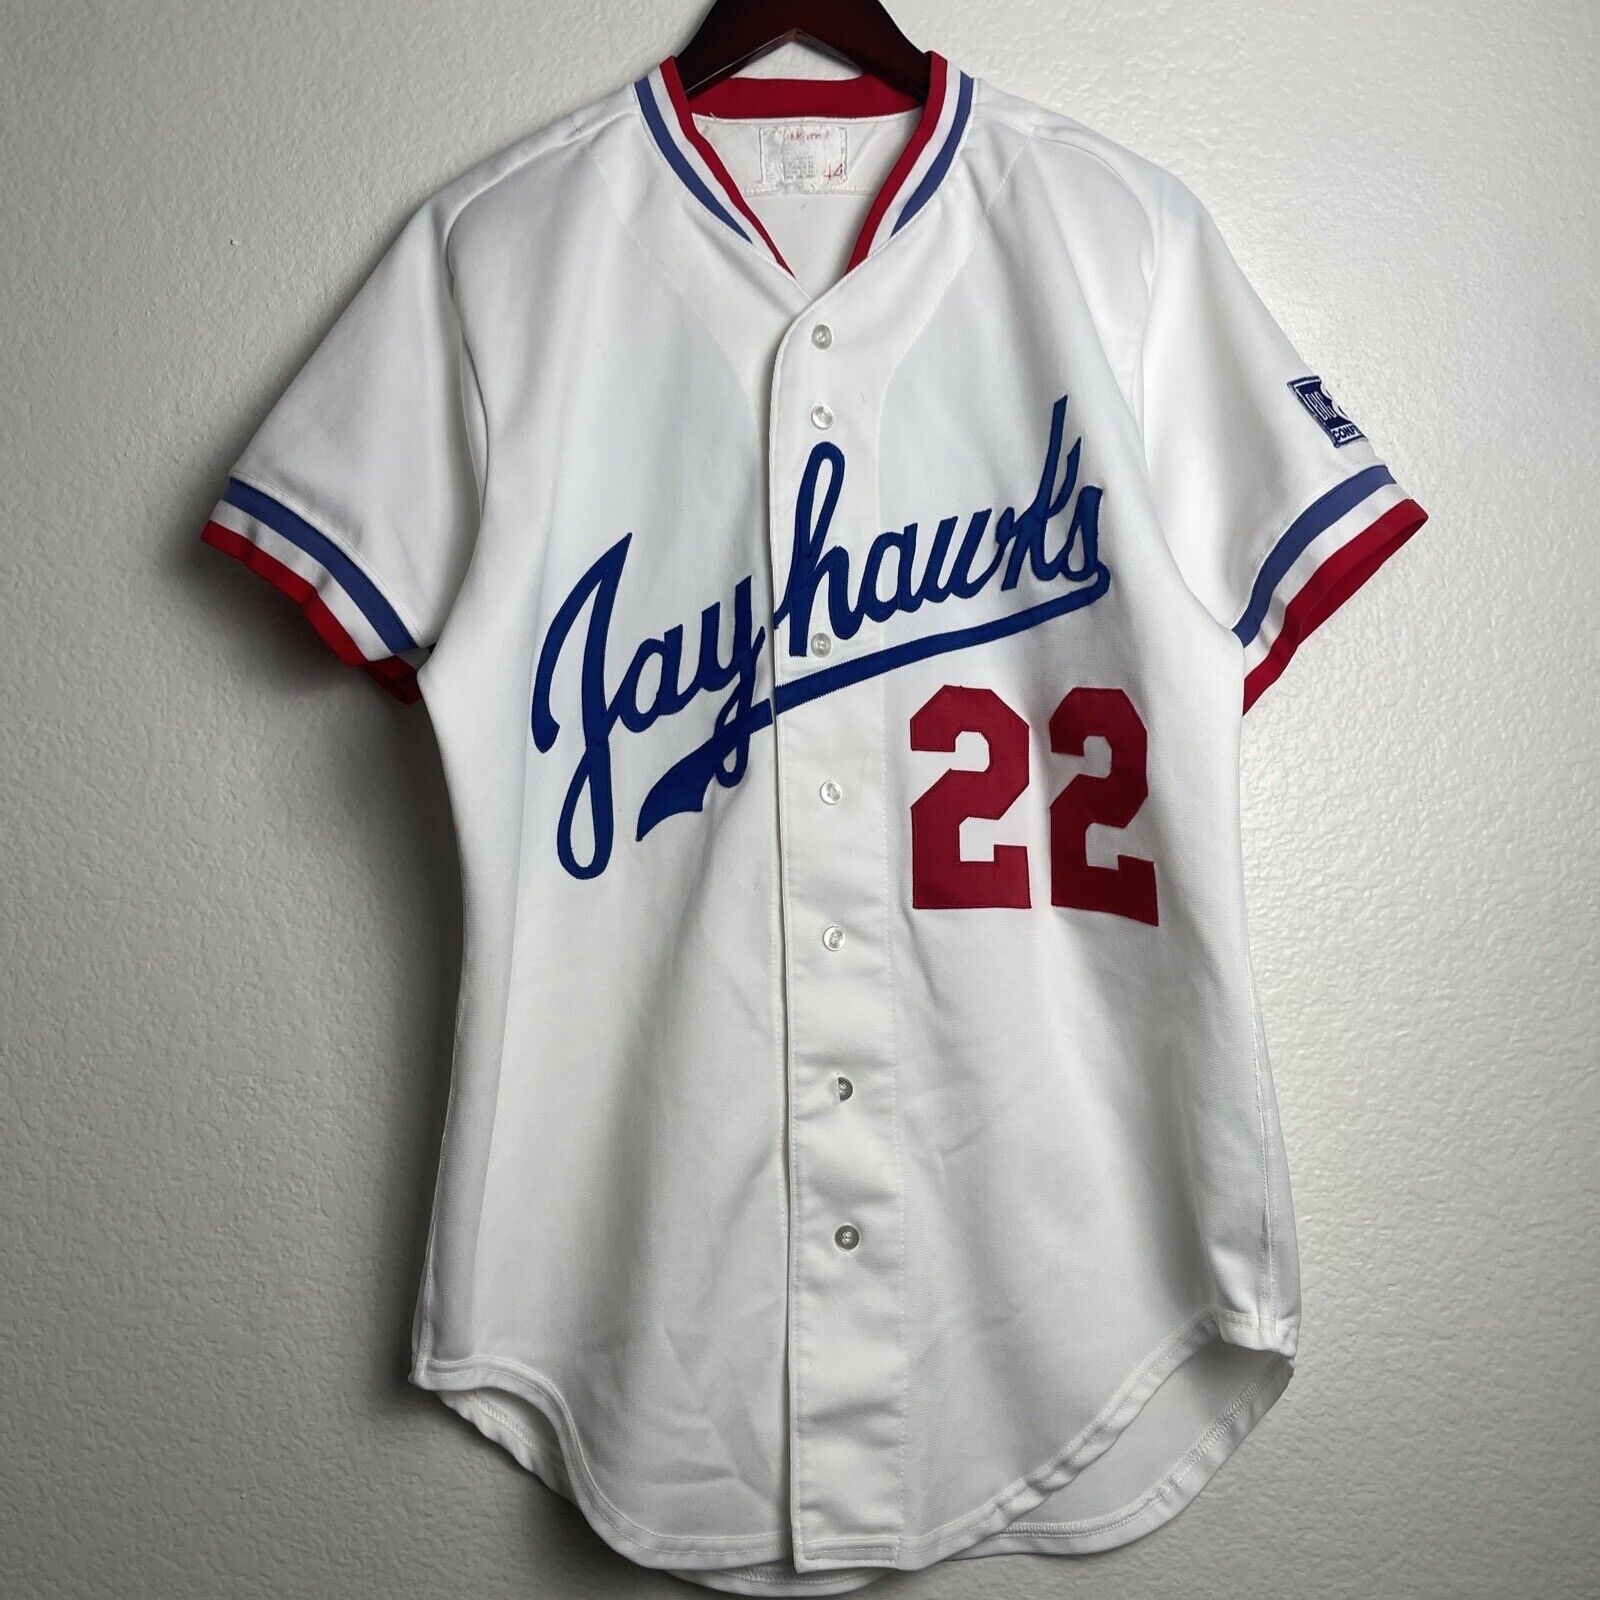 Vtg 90s University of Kansas Jayhawks Baseball Jersey #22 Wilson Authentic Sewn